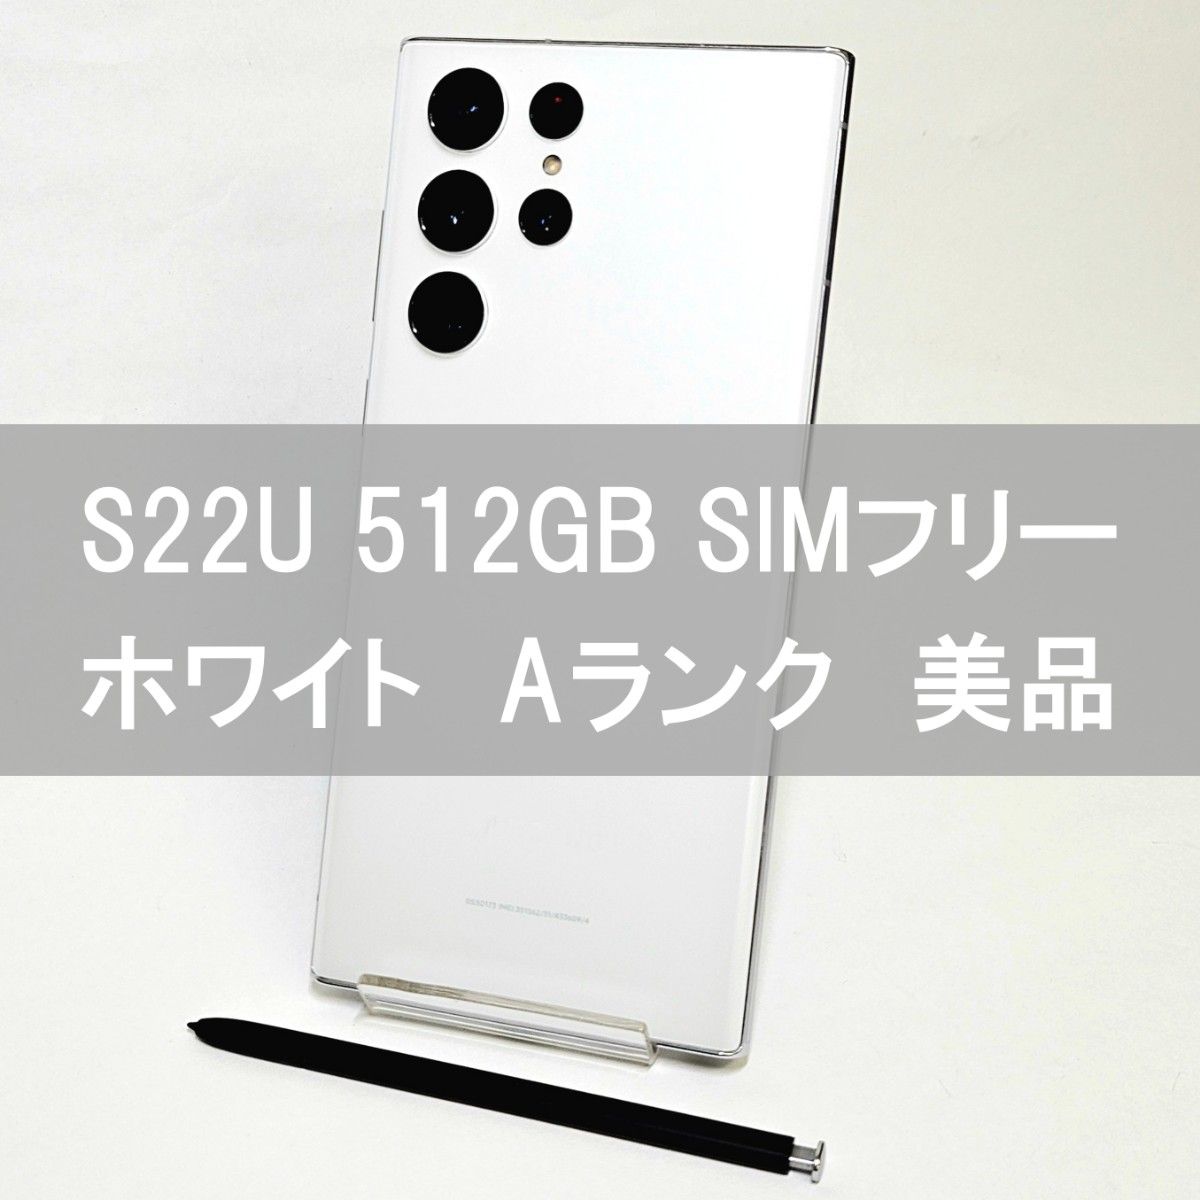 Galaxy S22 Ultra 512GB ホワイト SIMフリー A級 - スマートフォン本体